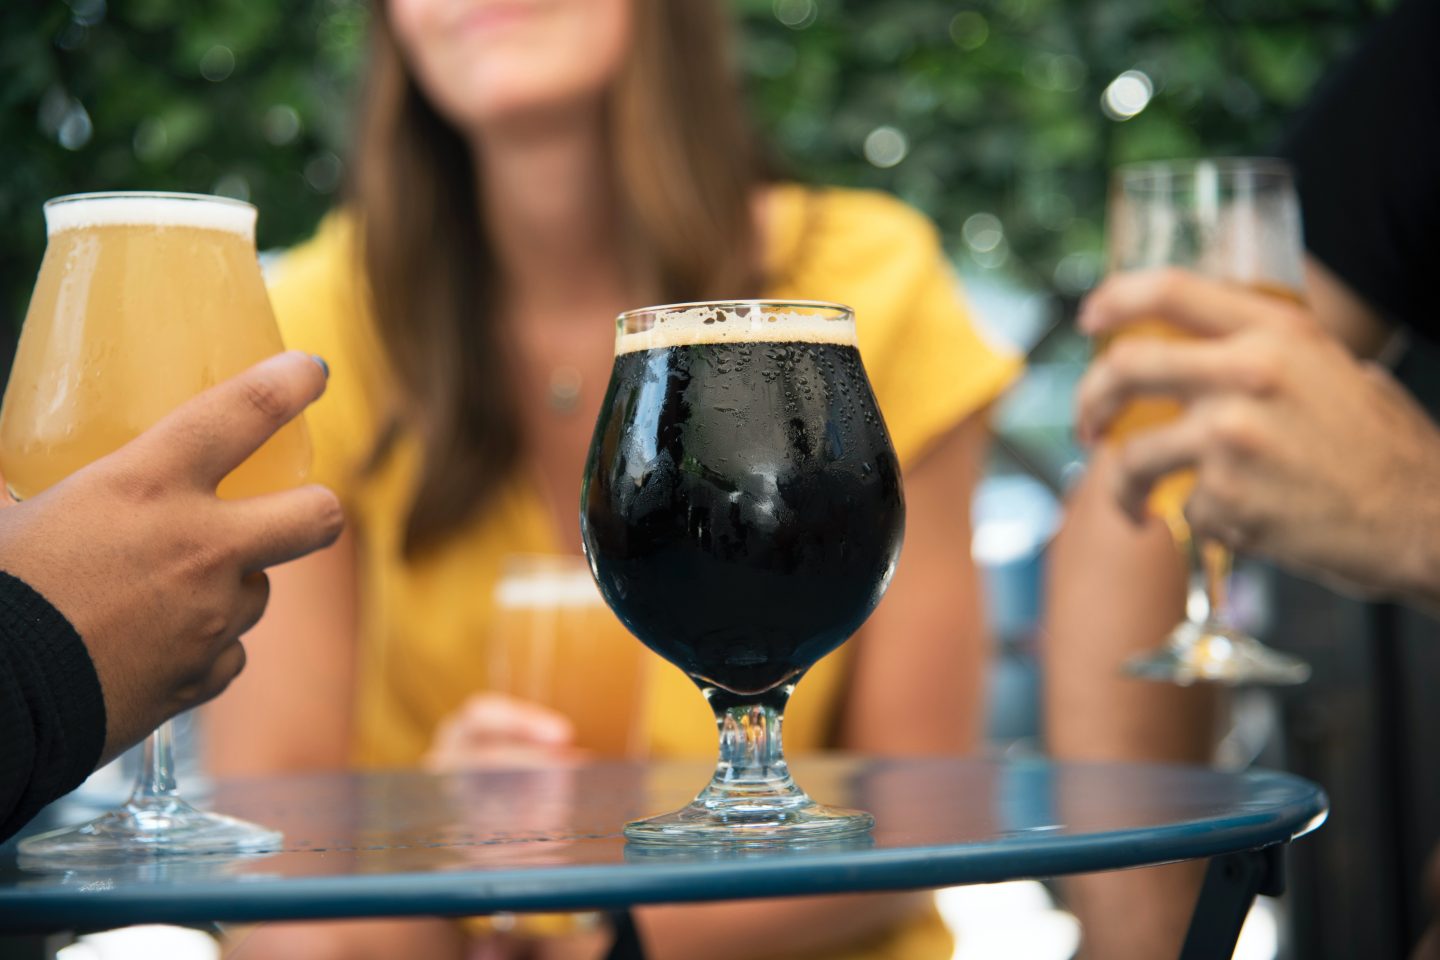 Mange ølglass på et bord med folk rundt. Det midterste glasset er et svart øl.